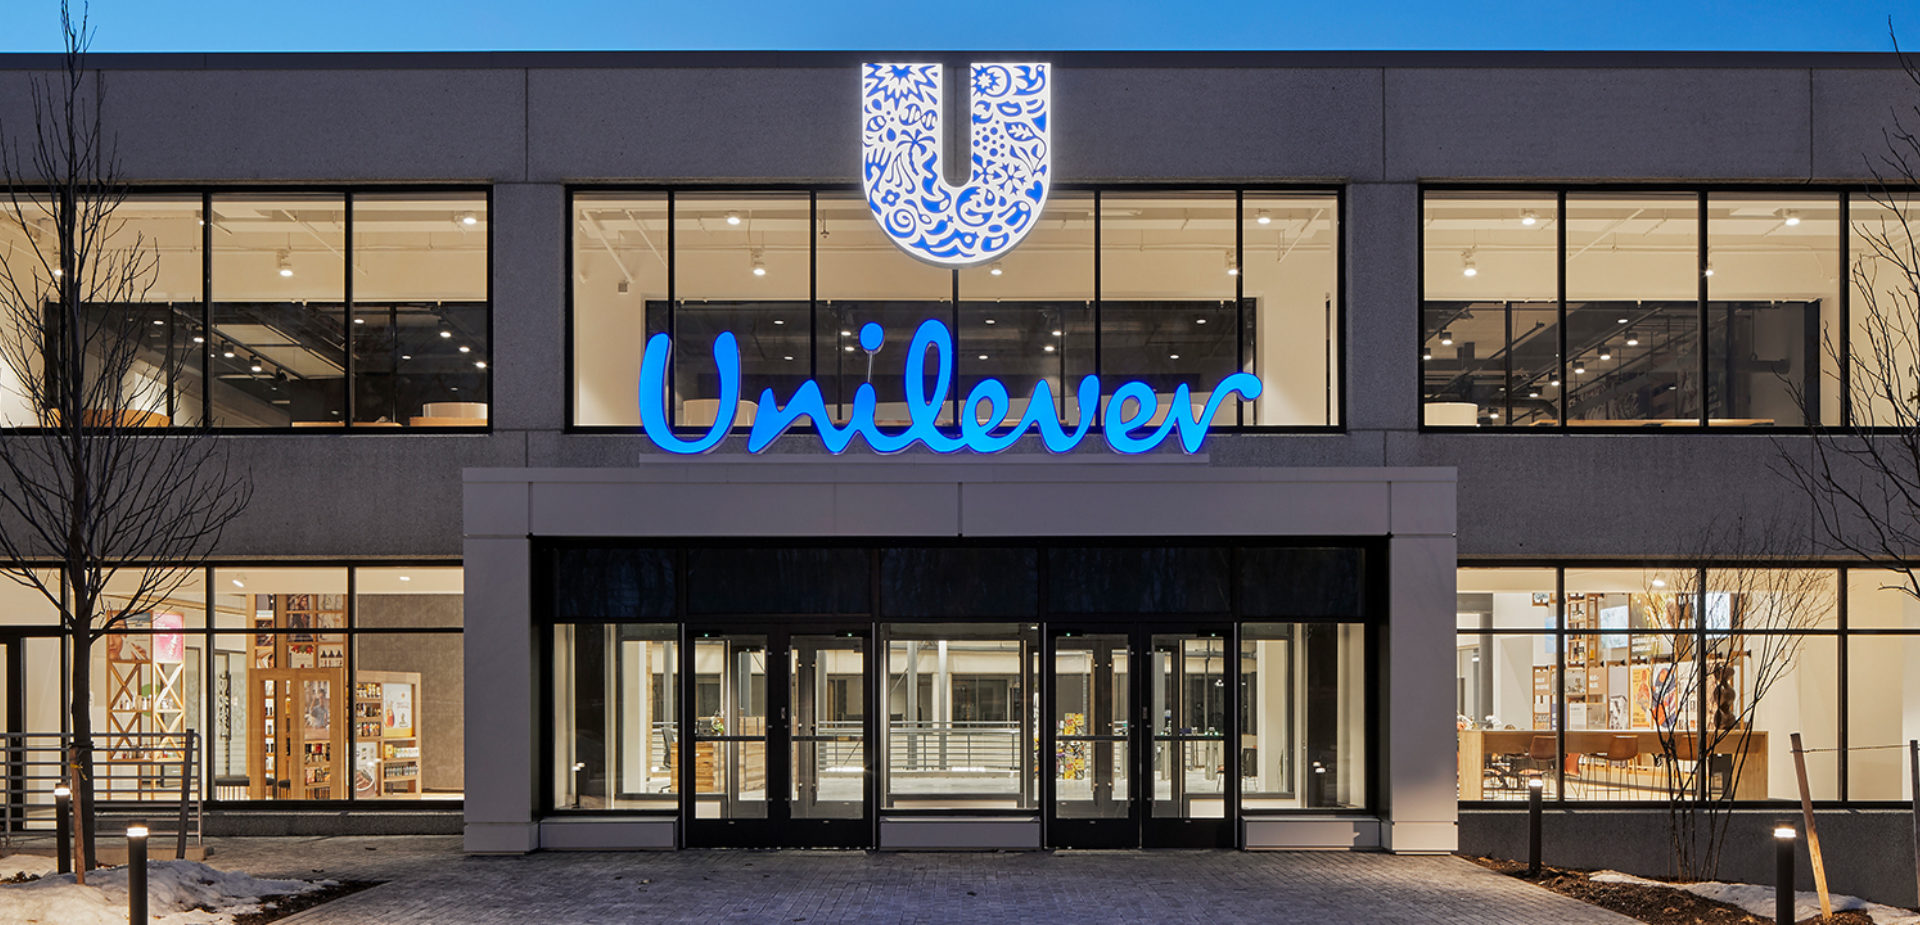 In haste to go Dutch, Unilever miscalculated concerns in Brexit-bound UK